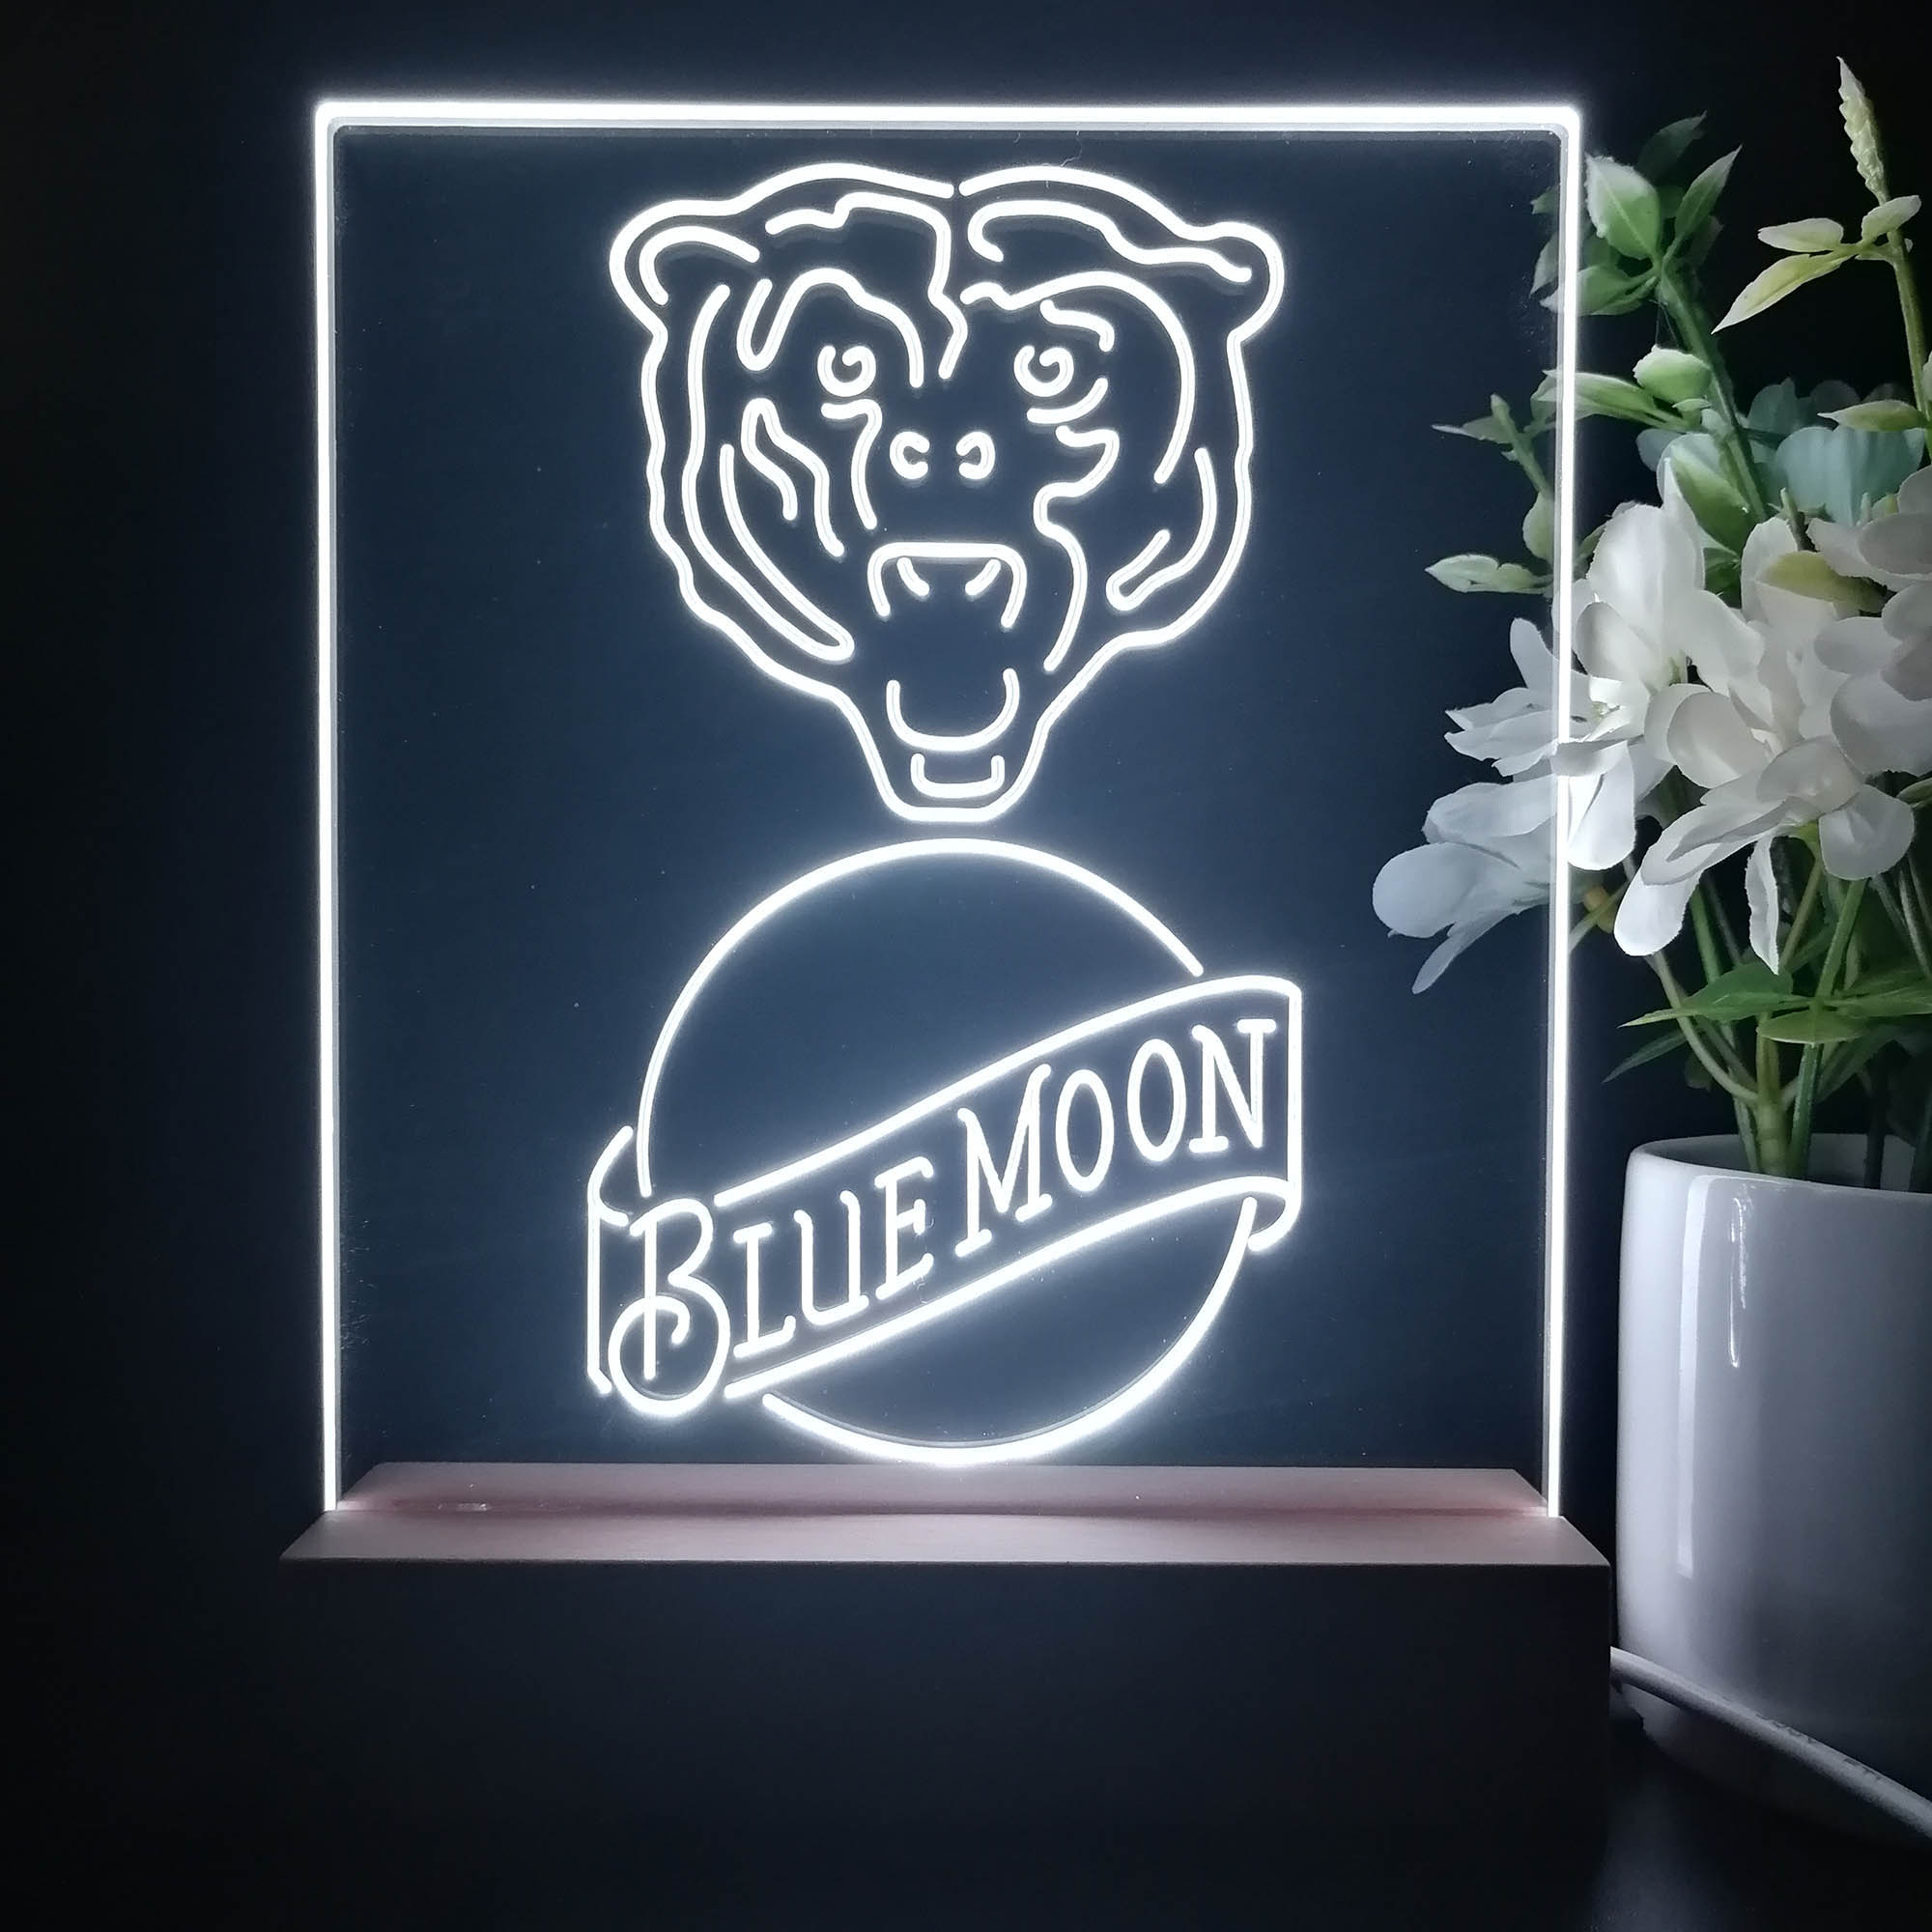 Chicago Bears Blue Moon Neon Sign Pub Bar Lamp